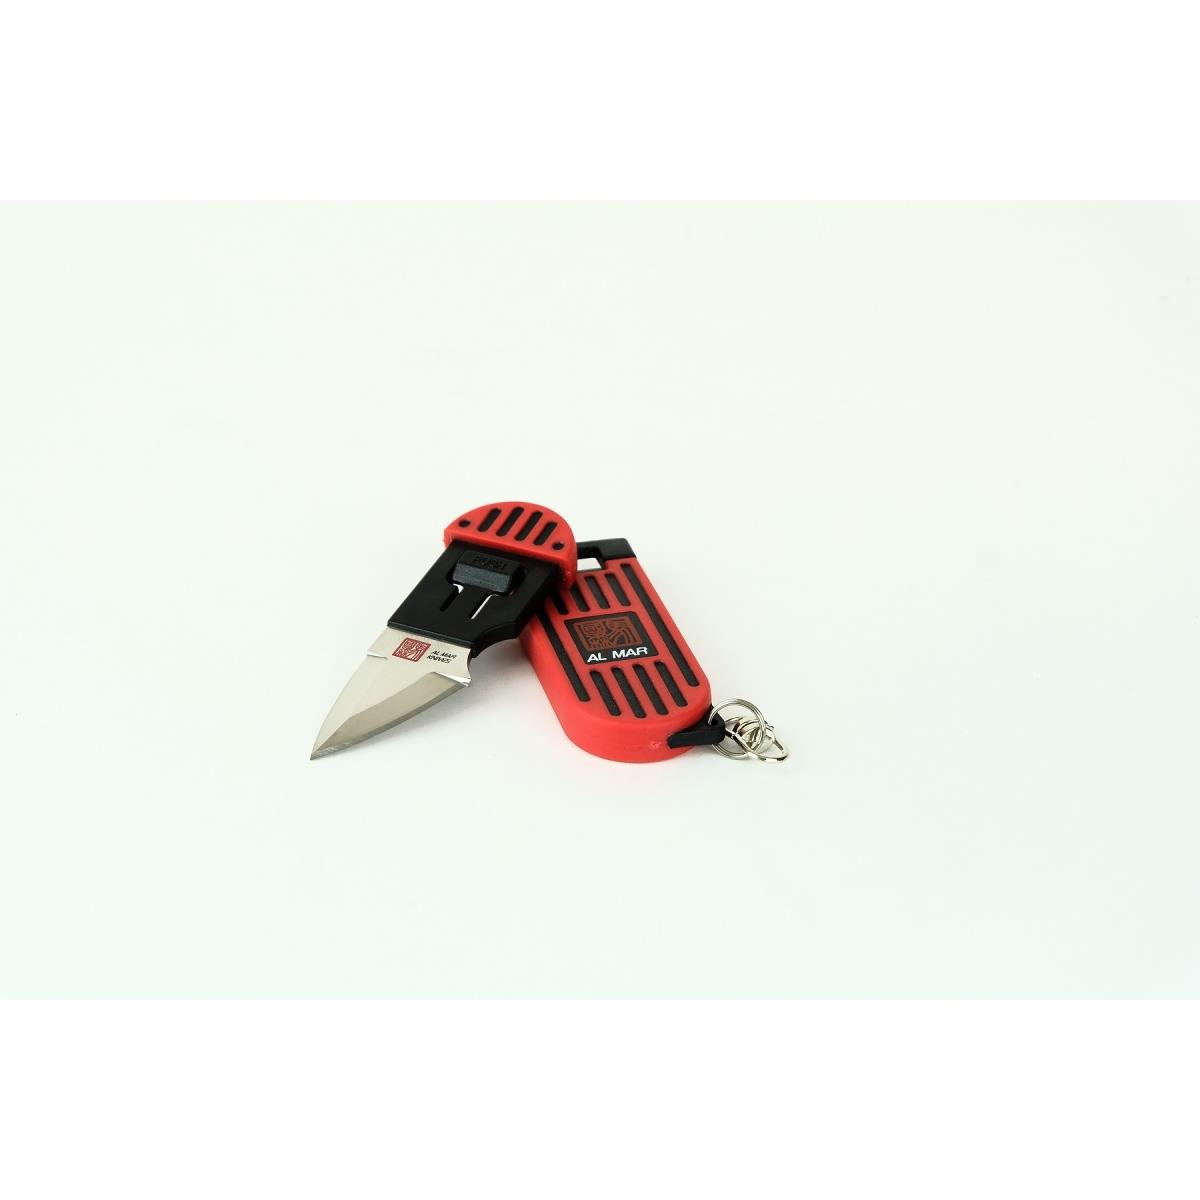 Нож брелок Stinger, red (AMK1001RBK) AL MAR набор инструментов stinger w0504 19 предметов пластиковый кейс